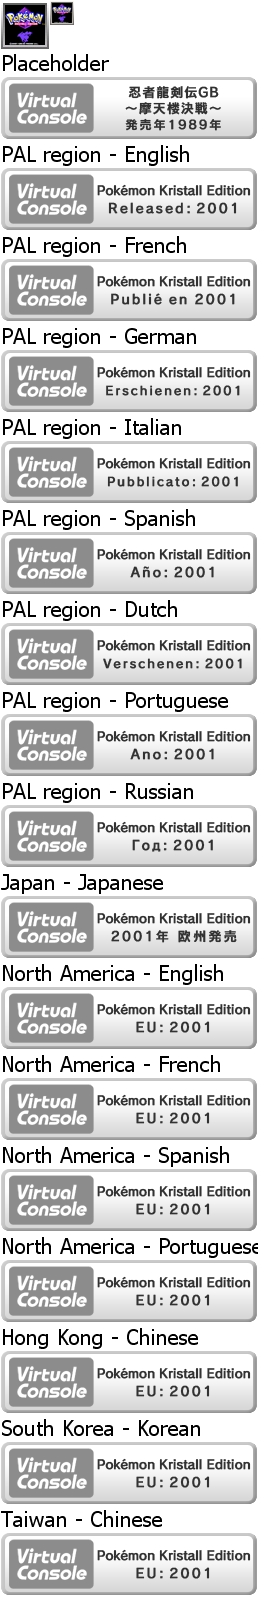 Virtual Console - Pokémon Kristall Edition